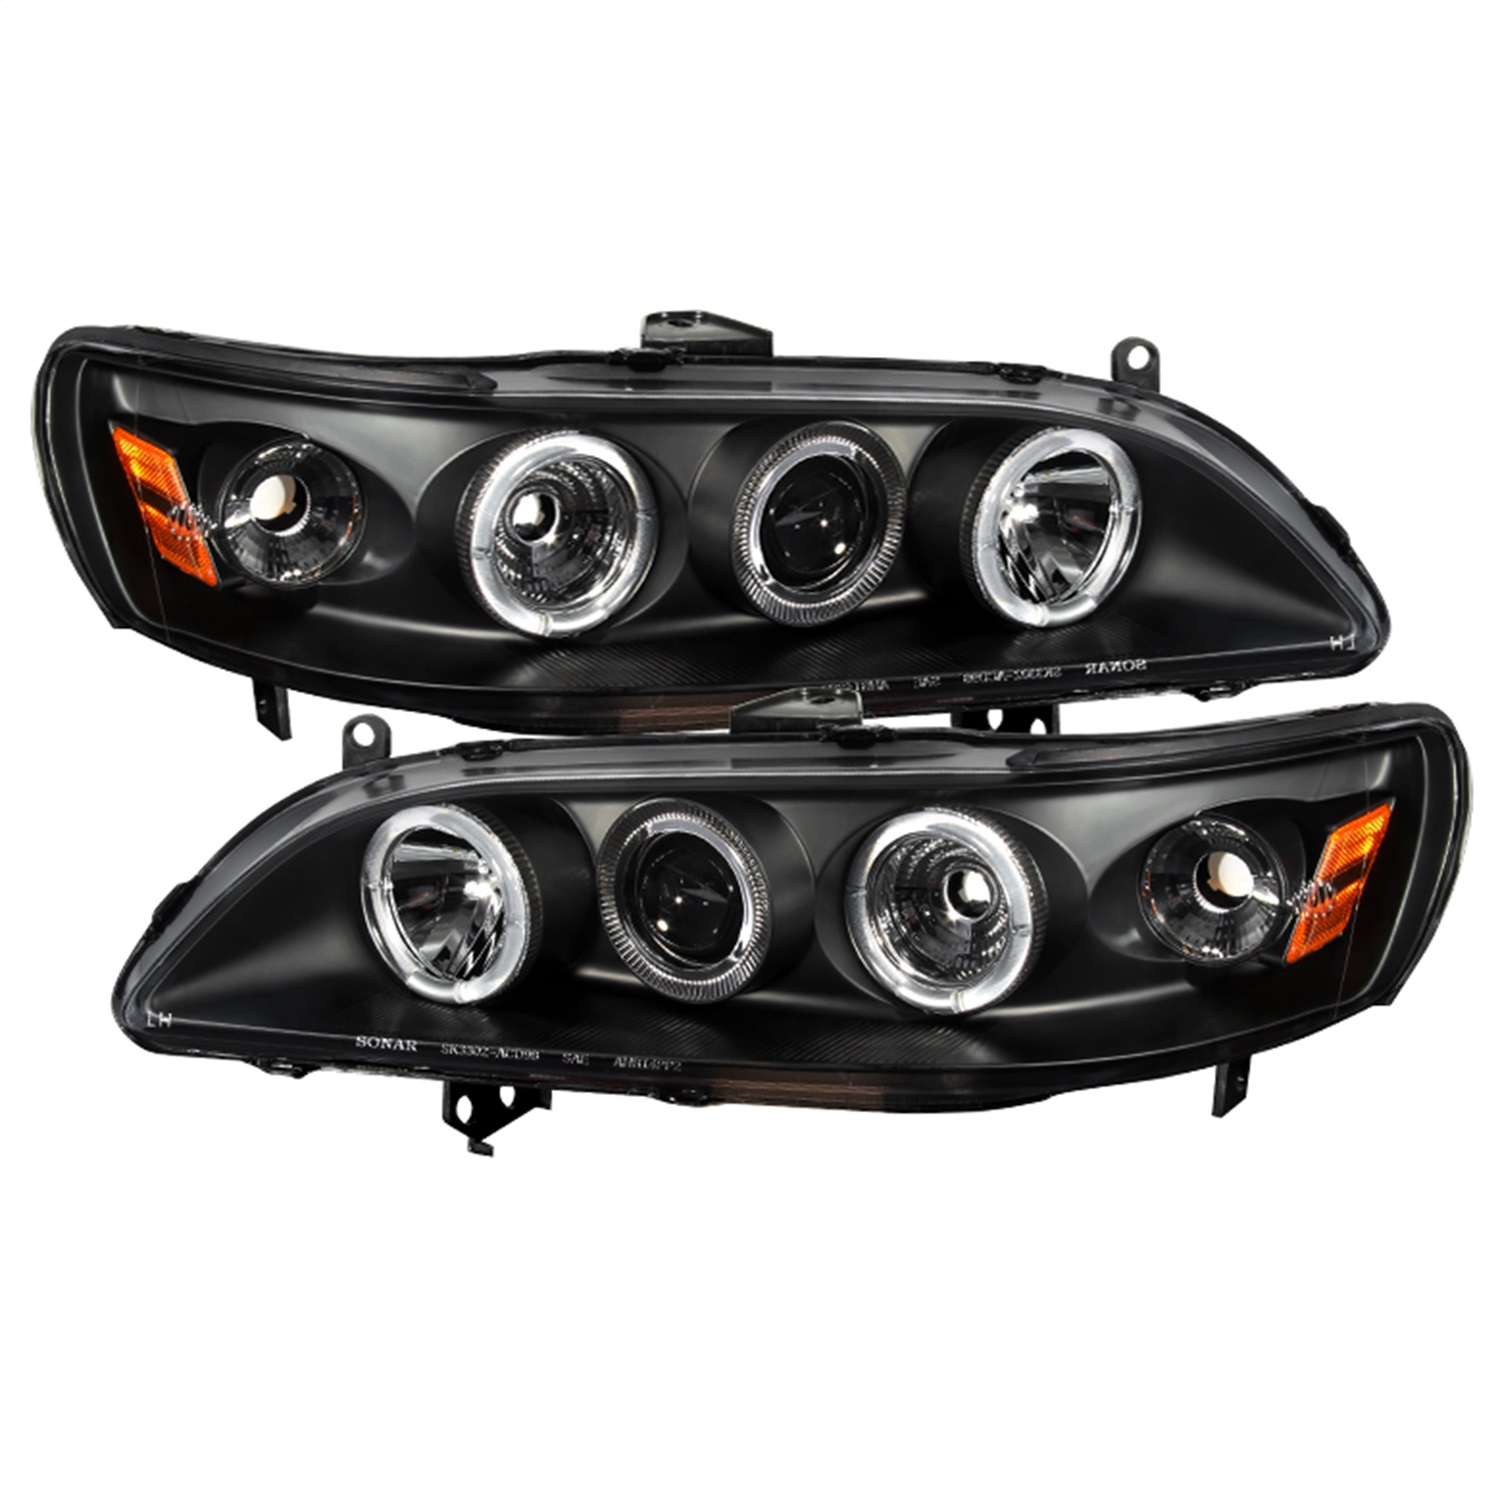 Spyder Auto 5010728 Halo Projector Headlights Fits 98-02 Accord